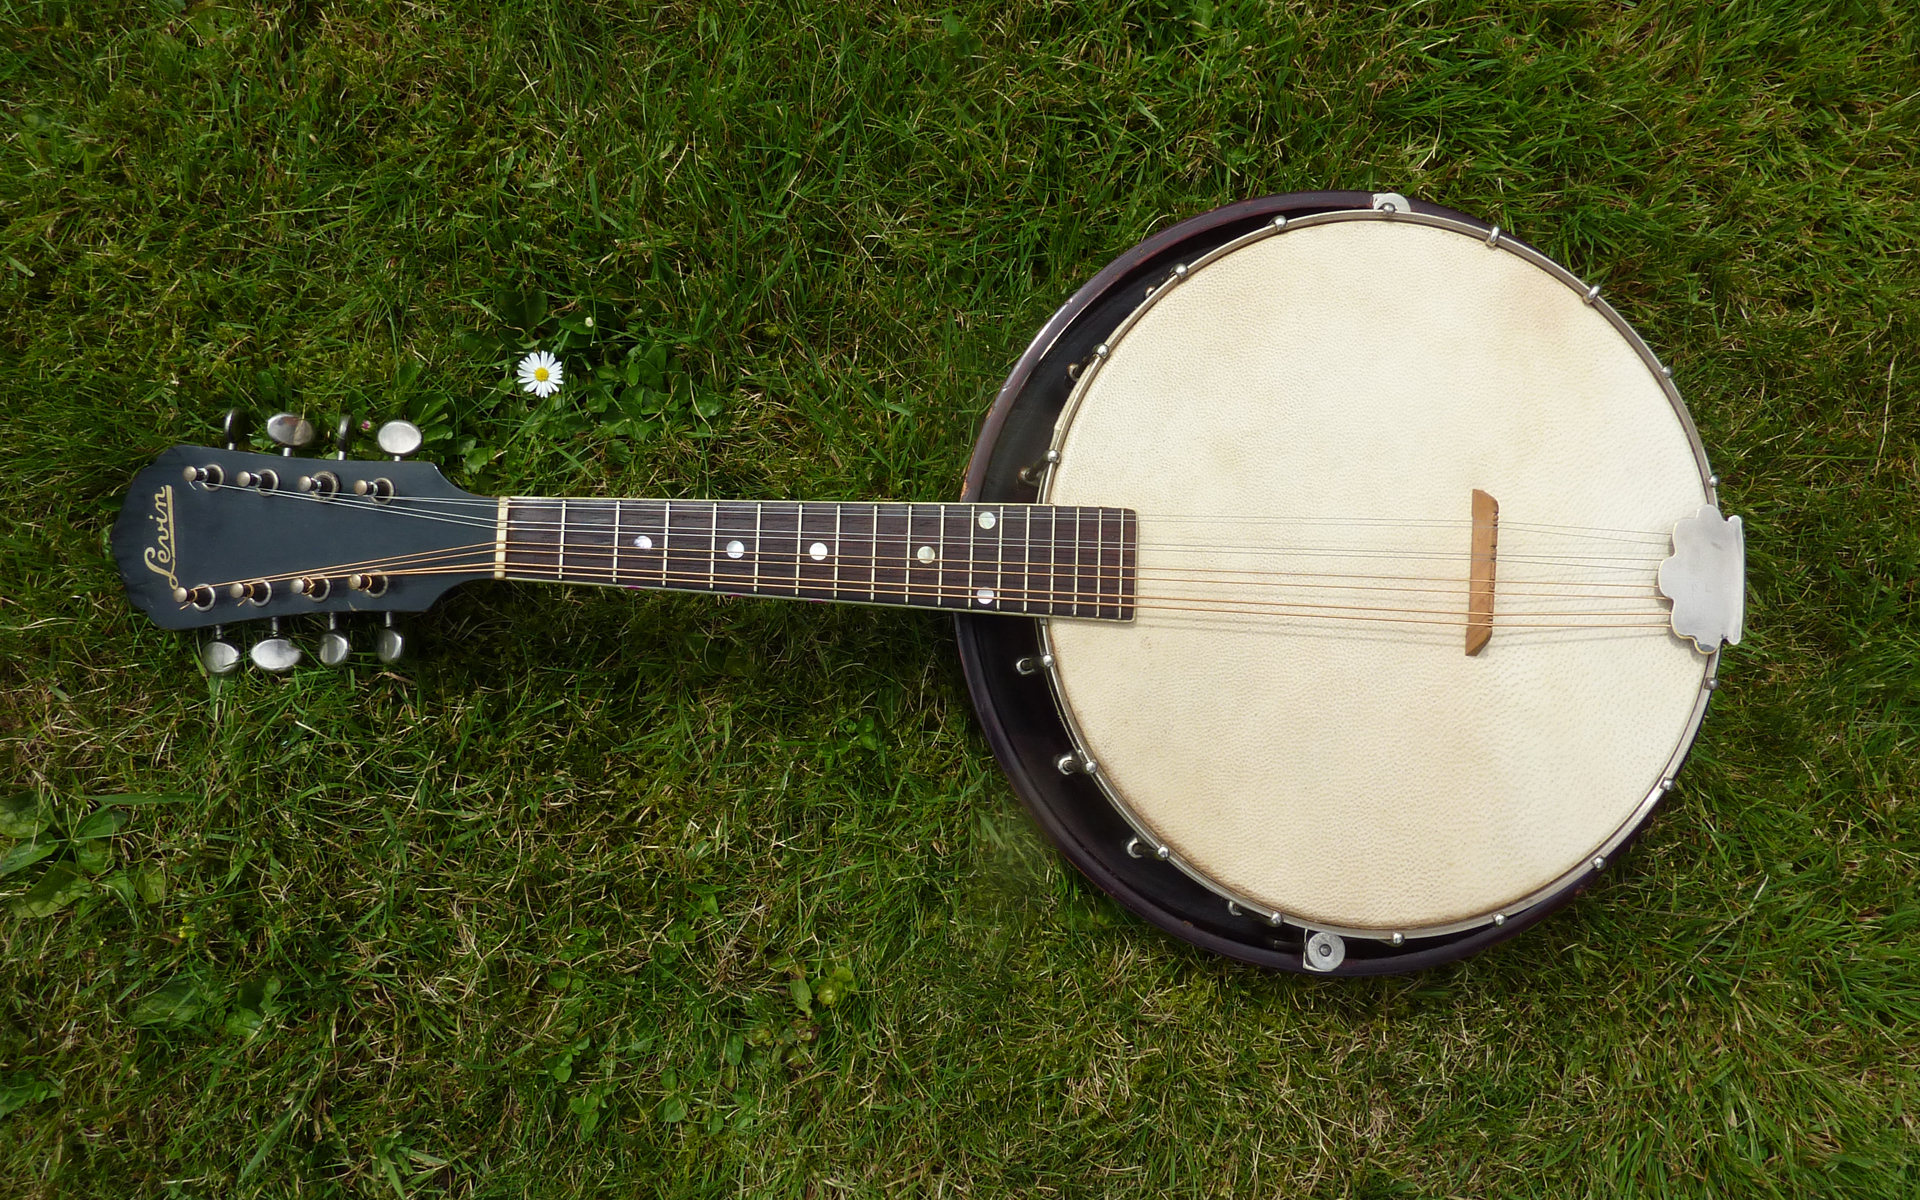 A Levin Banjolin or mandolin banjo of 1929